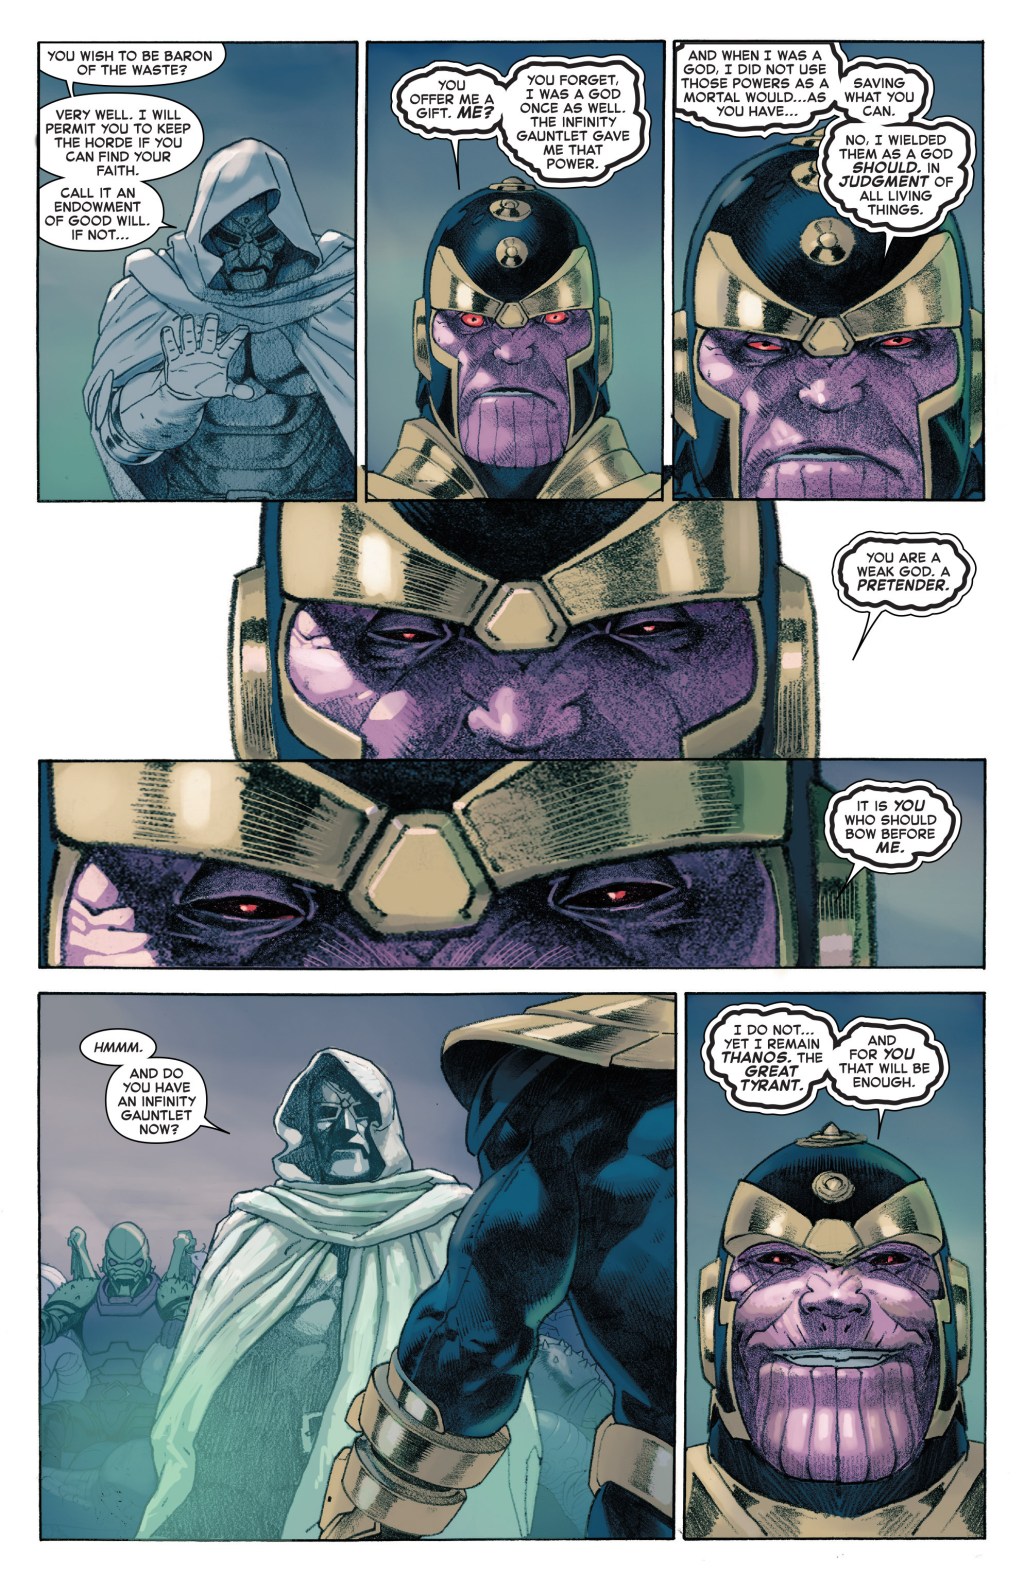 Thanos defies God Emperor Doom in Secret Wars Vol. 1 #8 "Under Siege" (2016), Marvel Comics. Words by Jonathan Hickman, art by Esad Ribić, Ive Svorcina, and Chris Eliopoulos.